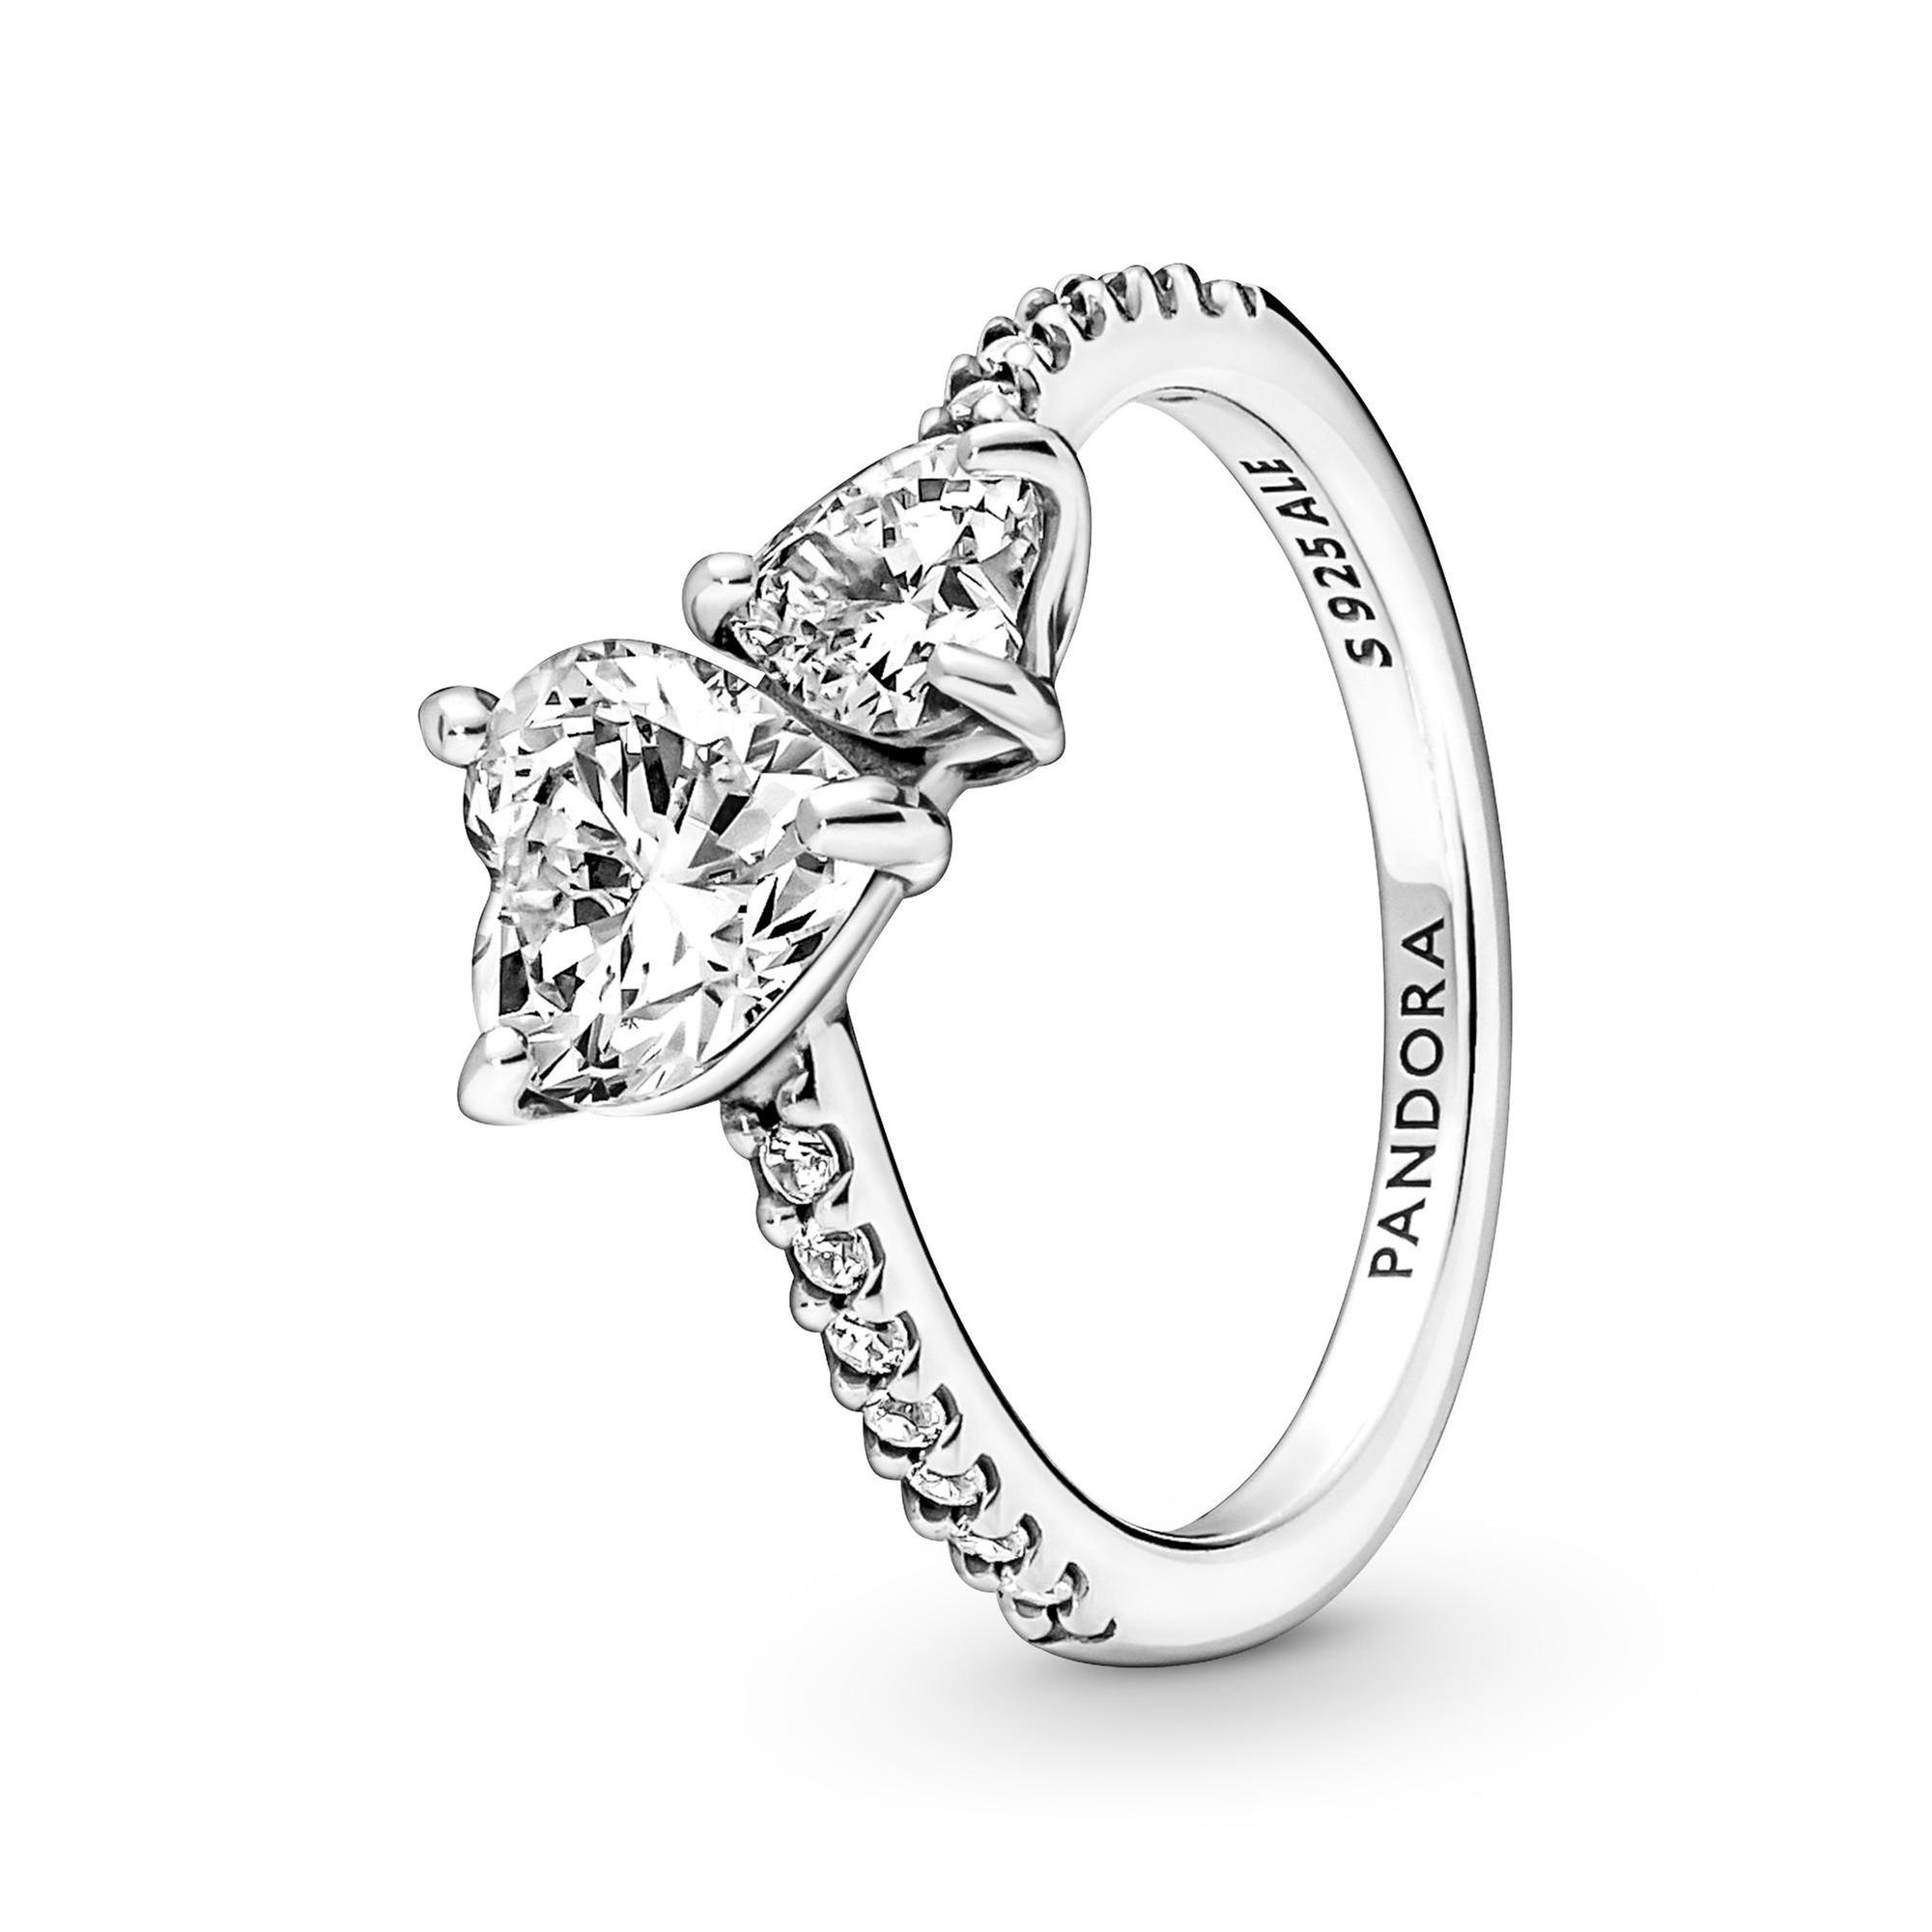 Pandora Double Heart Sparkling Ring - Size 7